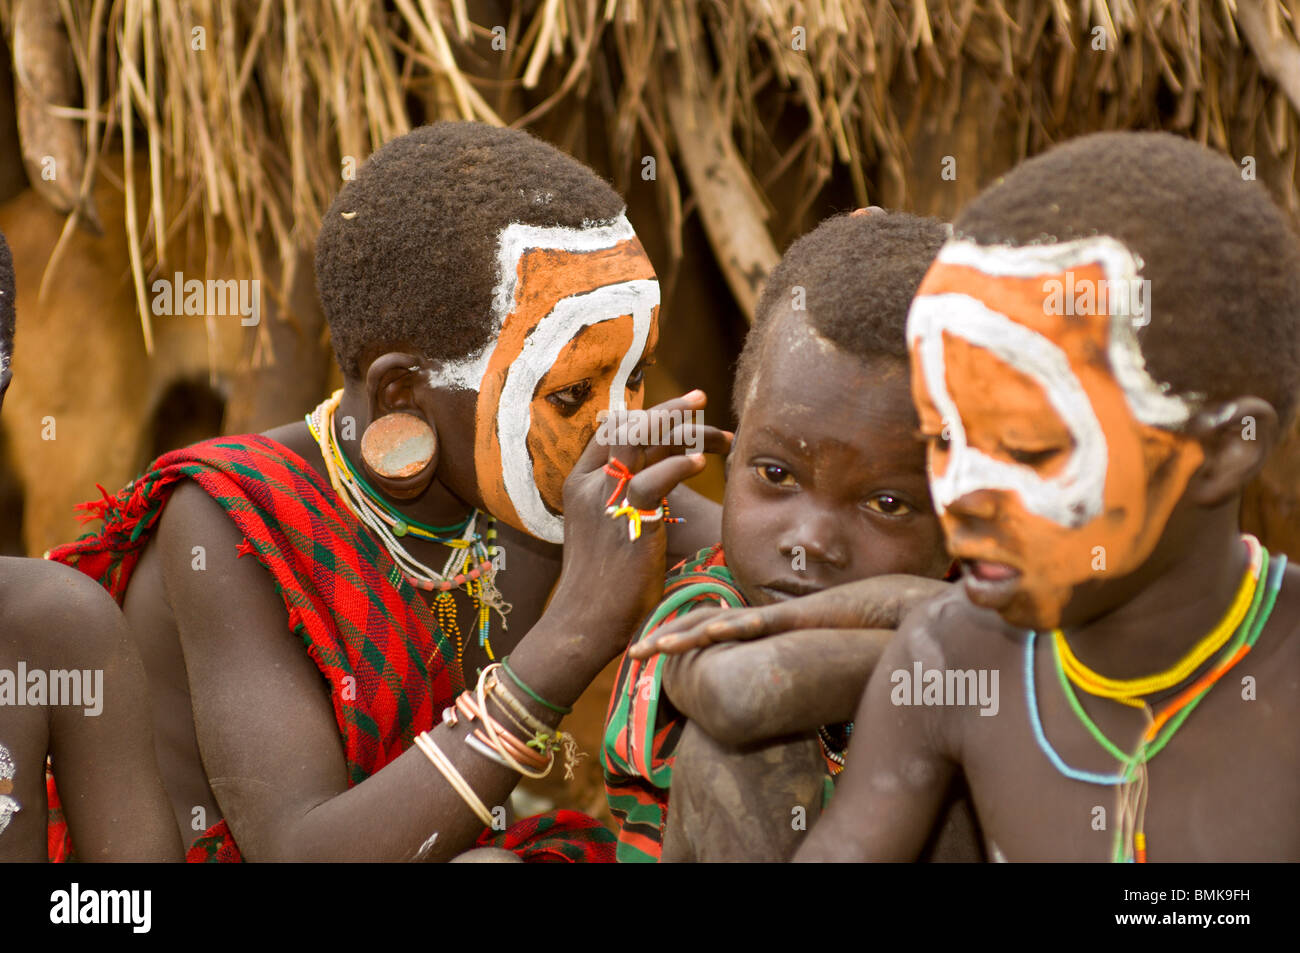 Africa, Ethiopia, Omo region, Kibish. Young Suri (Surma) tribe boy inspecting another boy's ear. Stock Photo